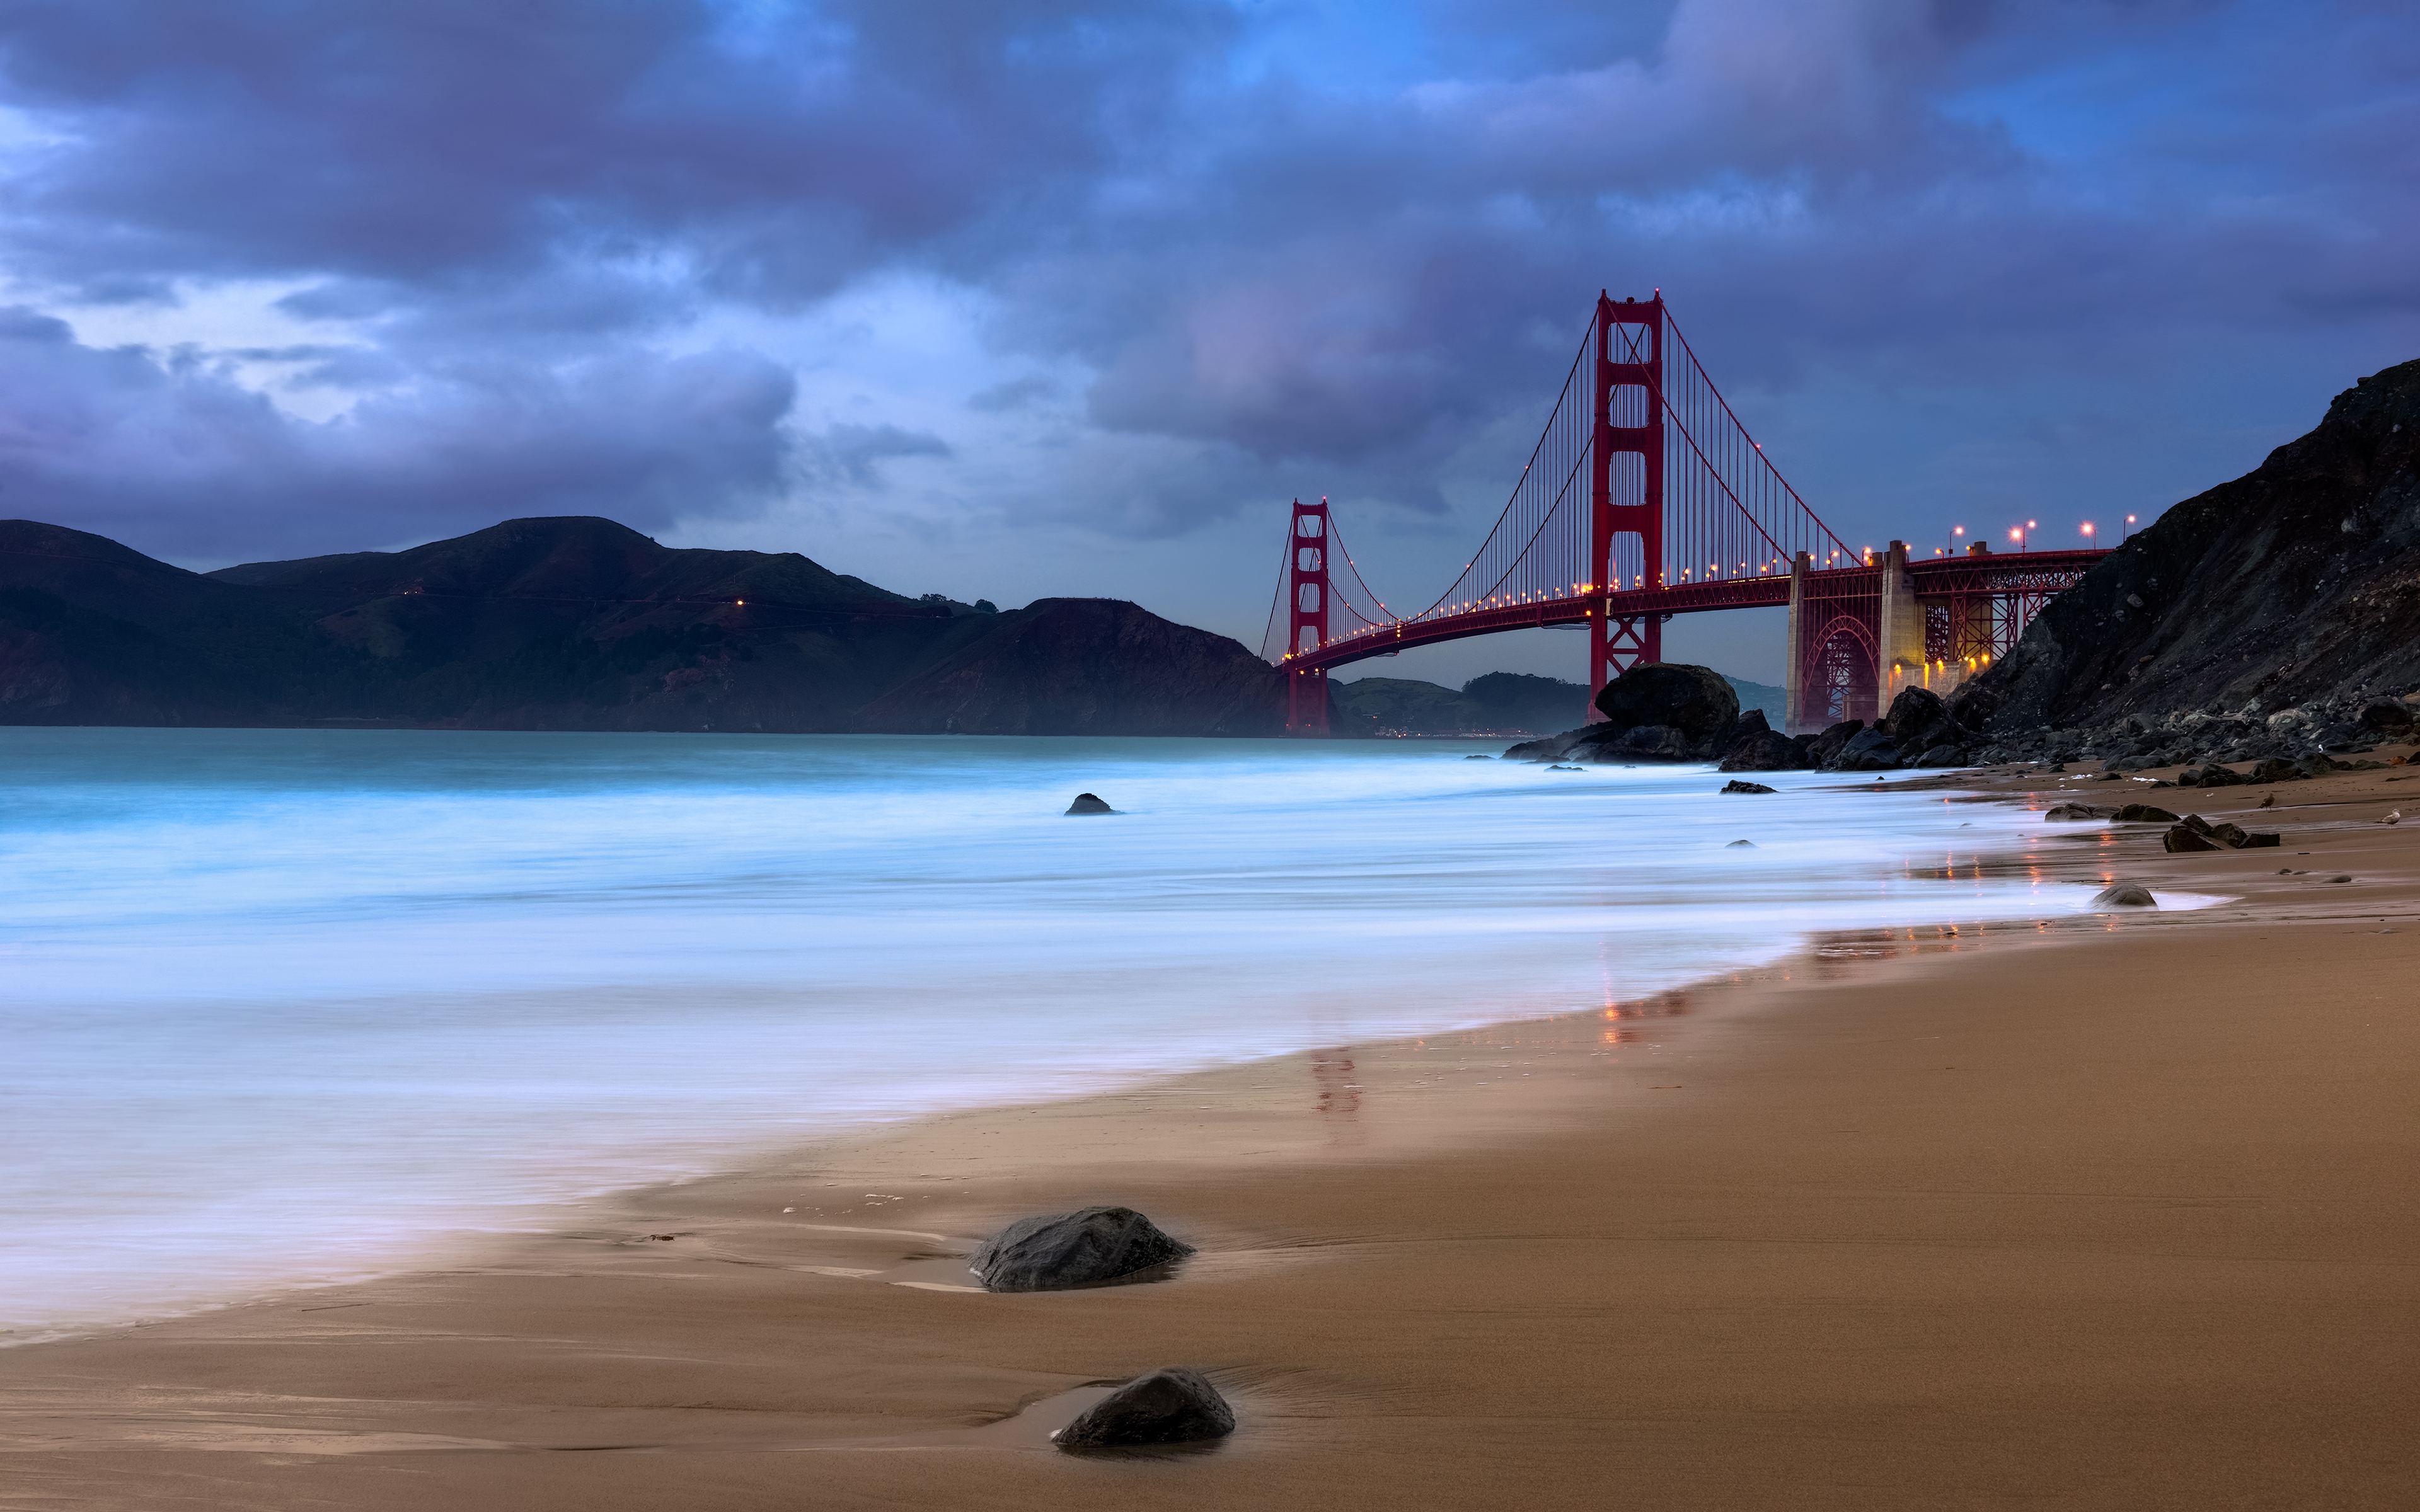 HD wallpaper, Baker Beach, Golden Gate Bridge, Coastline, Cloudy, Metal Structure, Landmark, Evening, California, San Francisco, Long Exposure